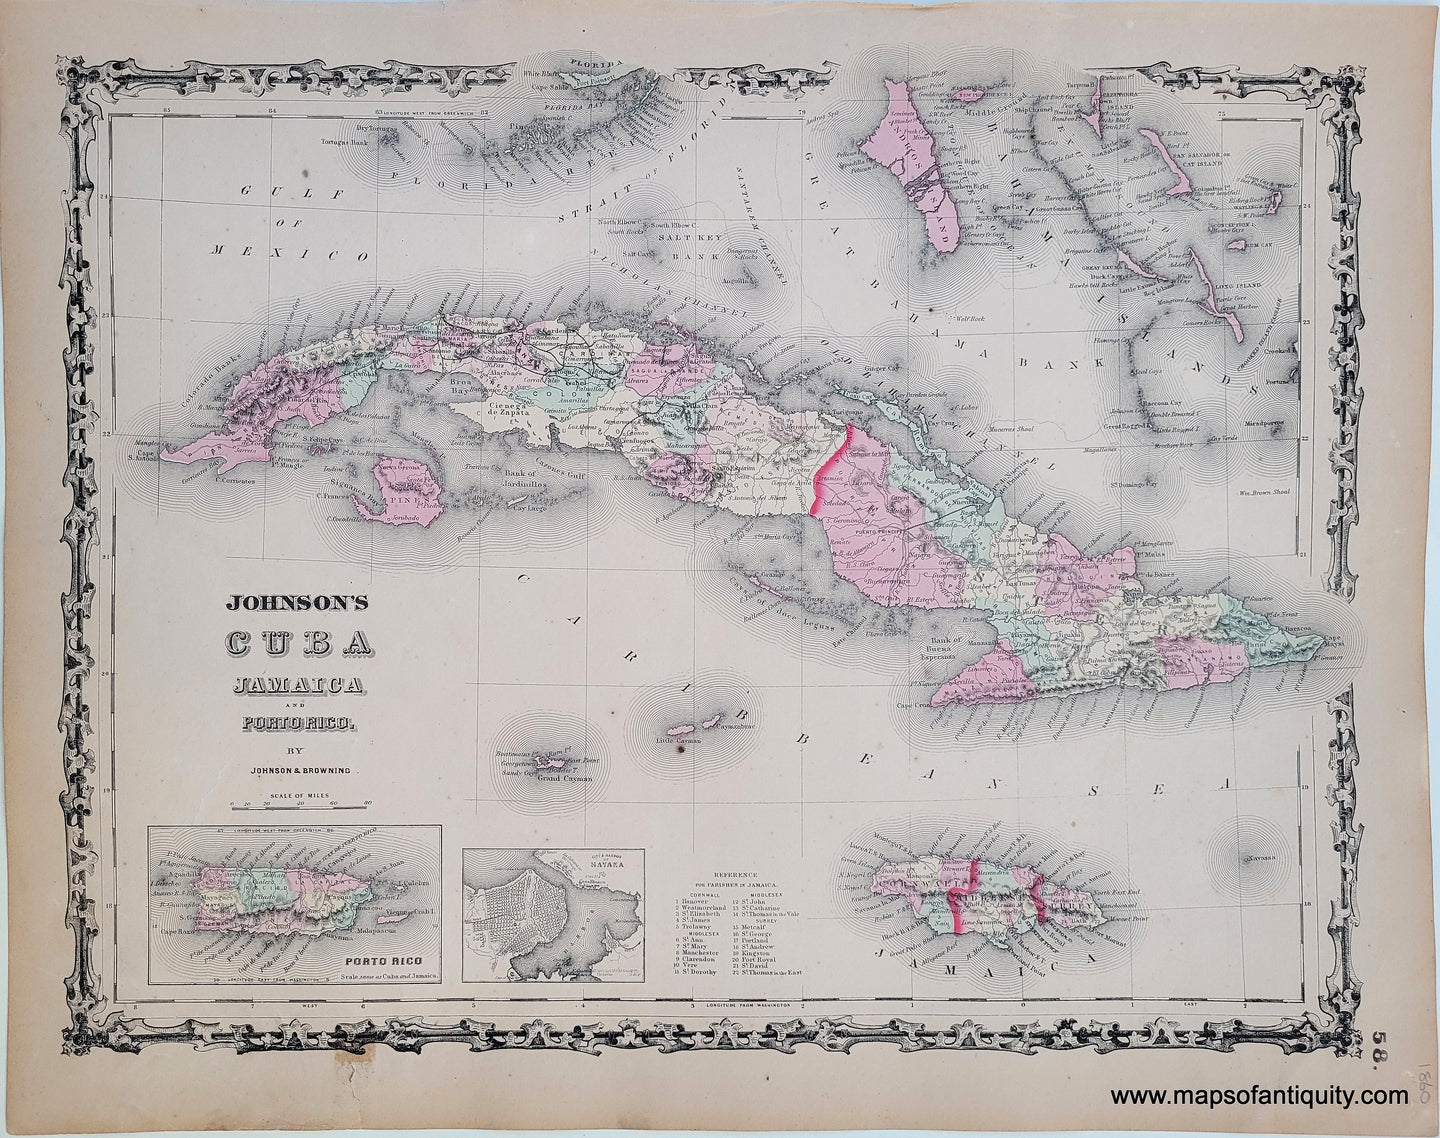 Antique-Map-Cuba-Jamaica-Puerto-Rico-Caribbean-Johnson-1860-bahamas-cayman-islands-florida-keys